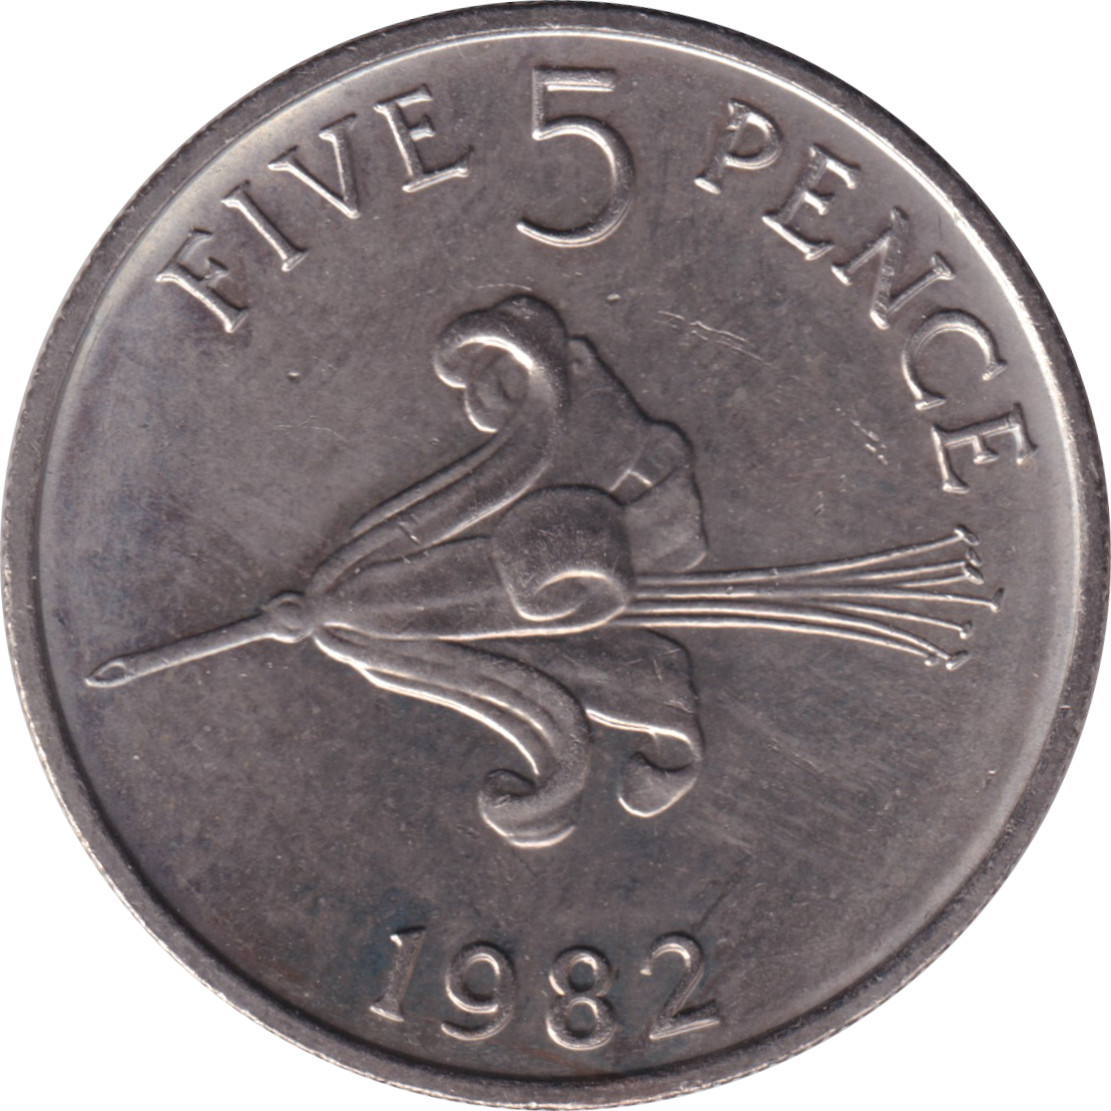 5 pence - Fleur - Five pence